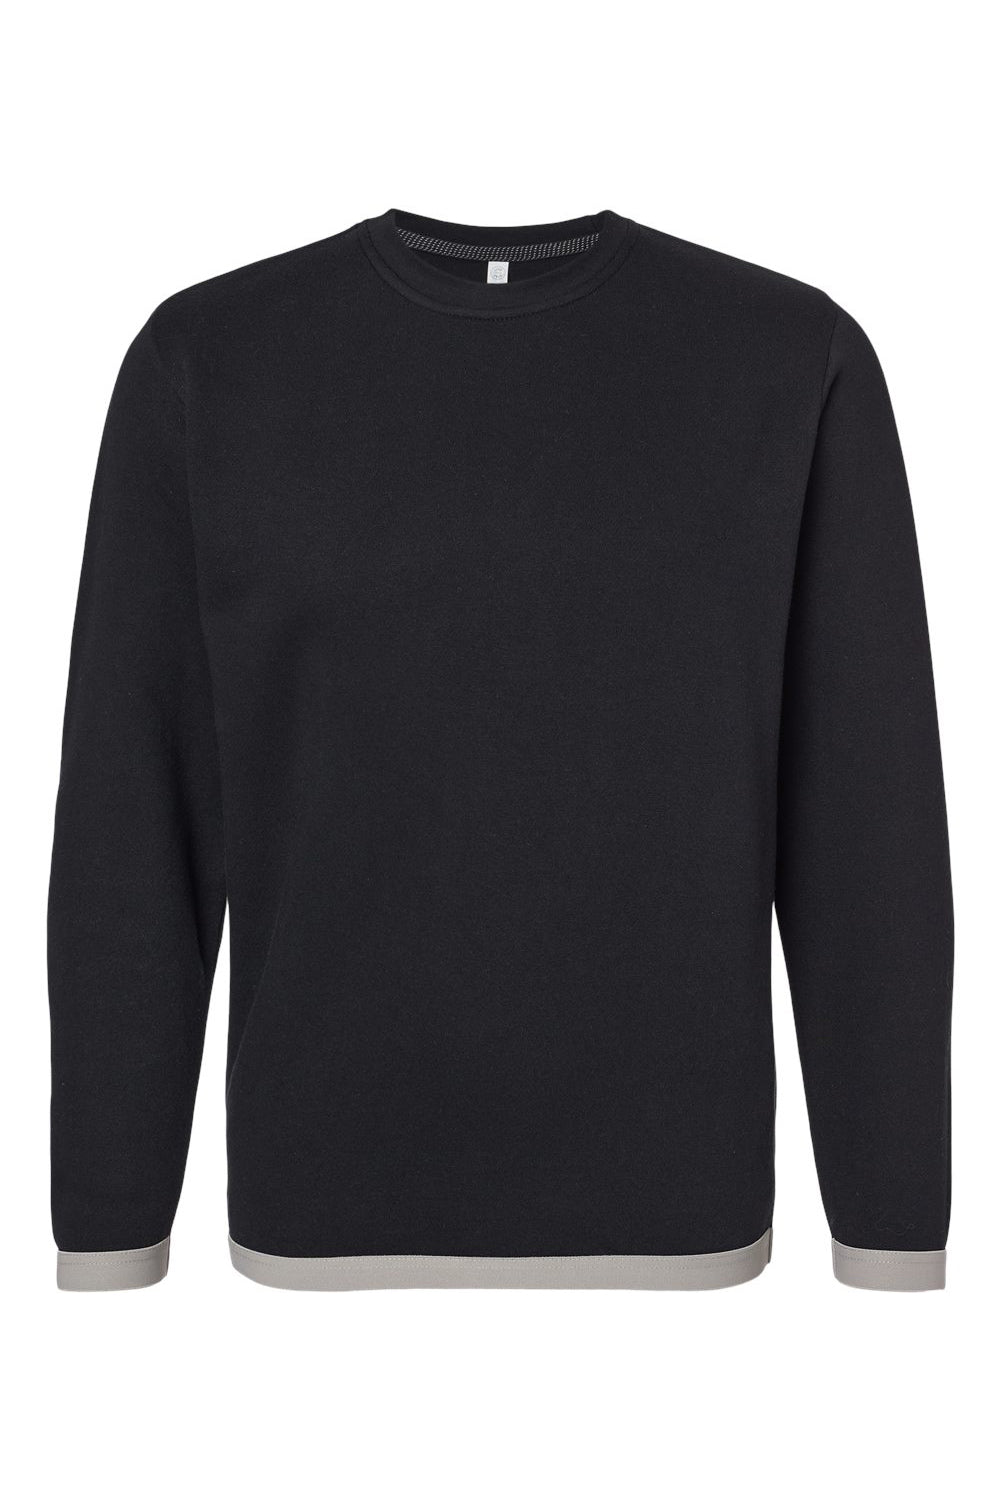 LAT 6789 Mens The Statement Fleece Crewneck Sweatshirt Black/Titanium Grey Flat Front